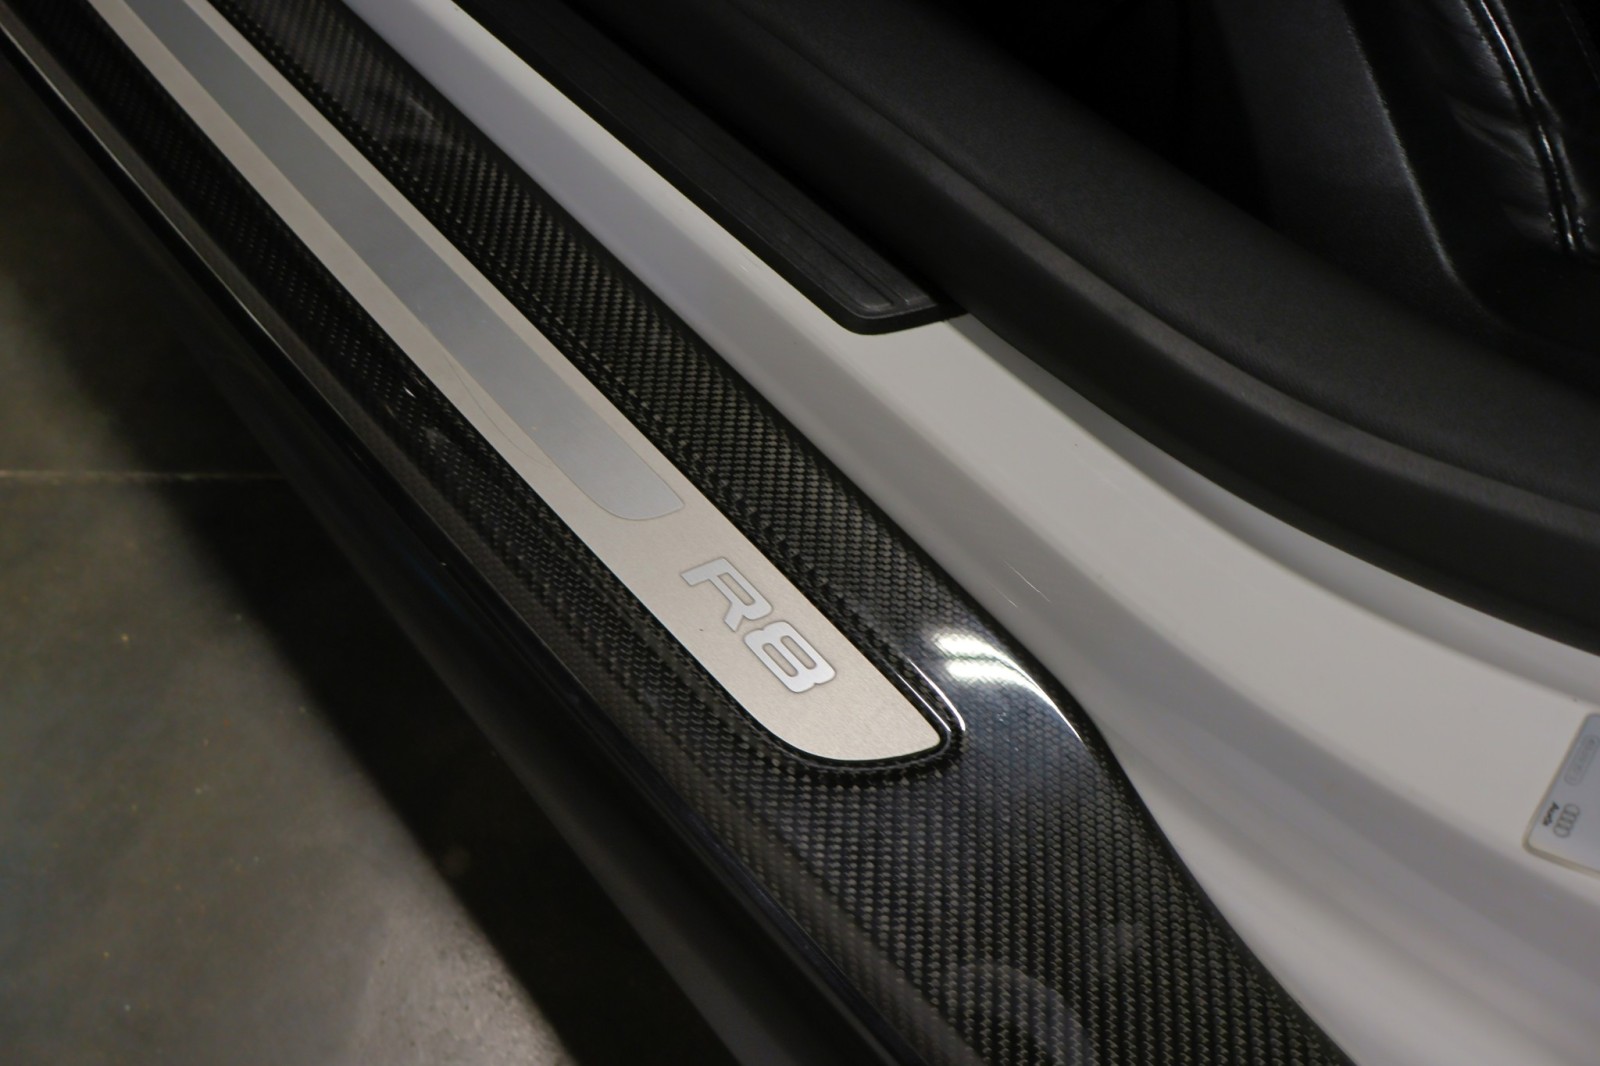 2012 Audi R8 Coupe Auto quattro 5.2L CarbonSideBlades EnhancedL 41